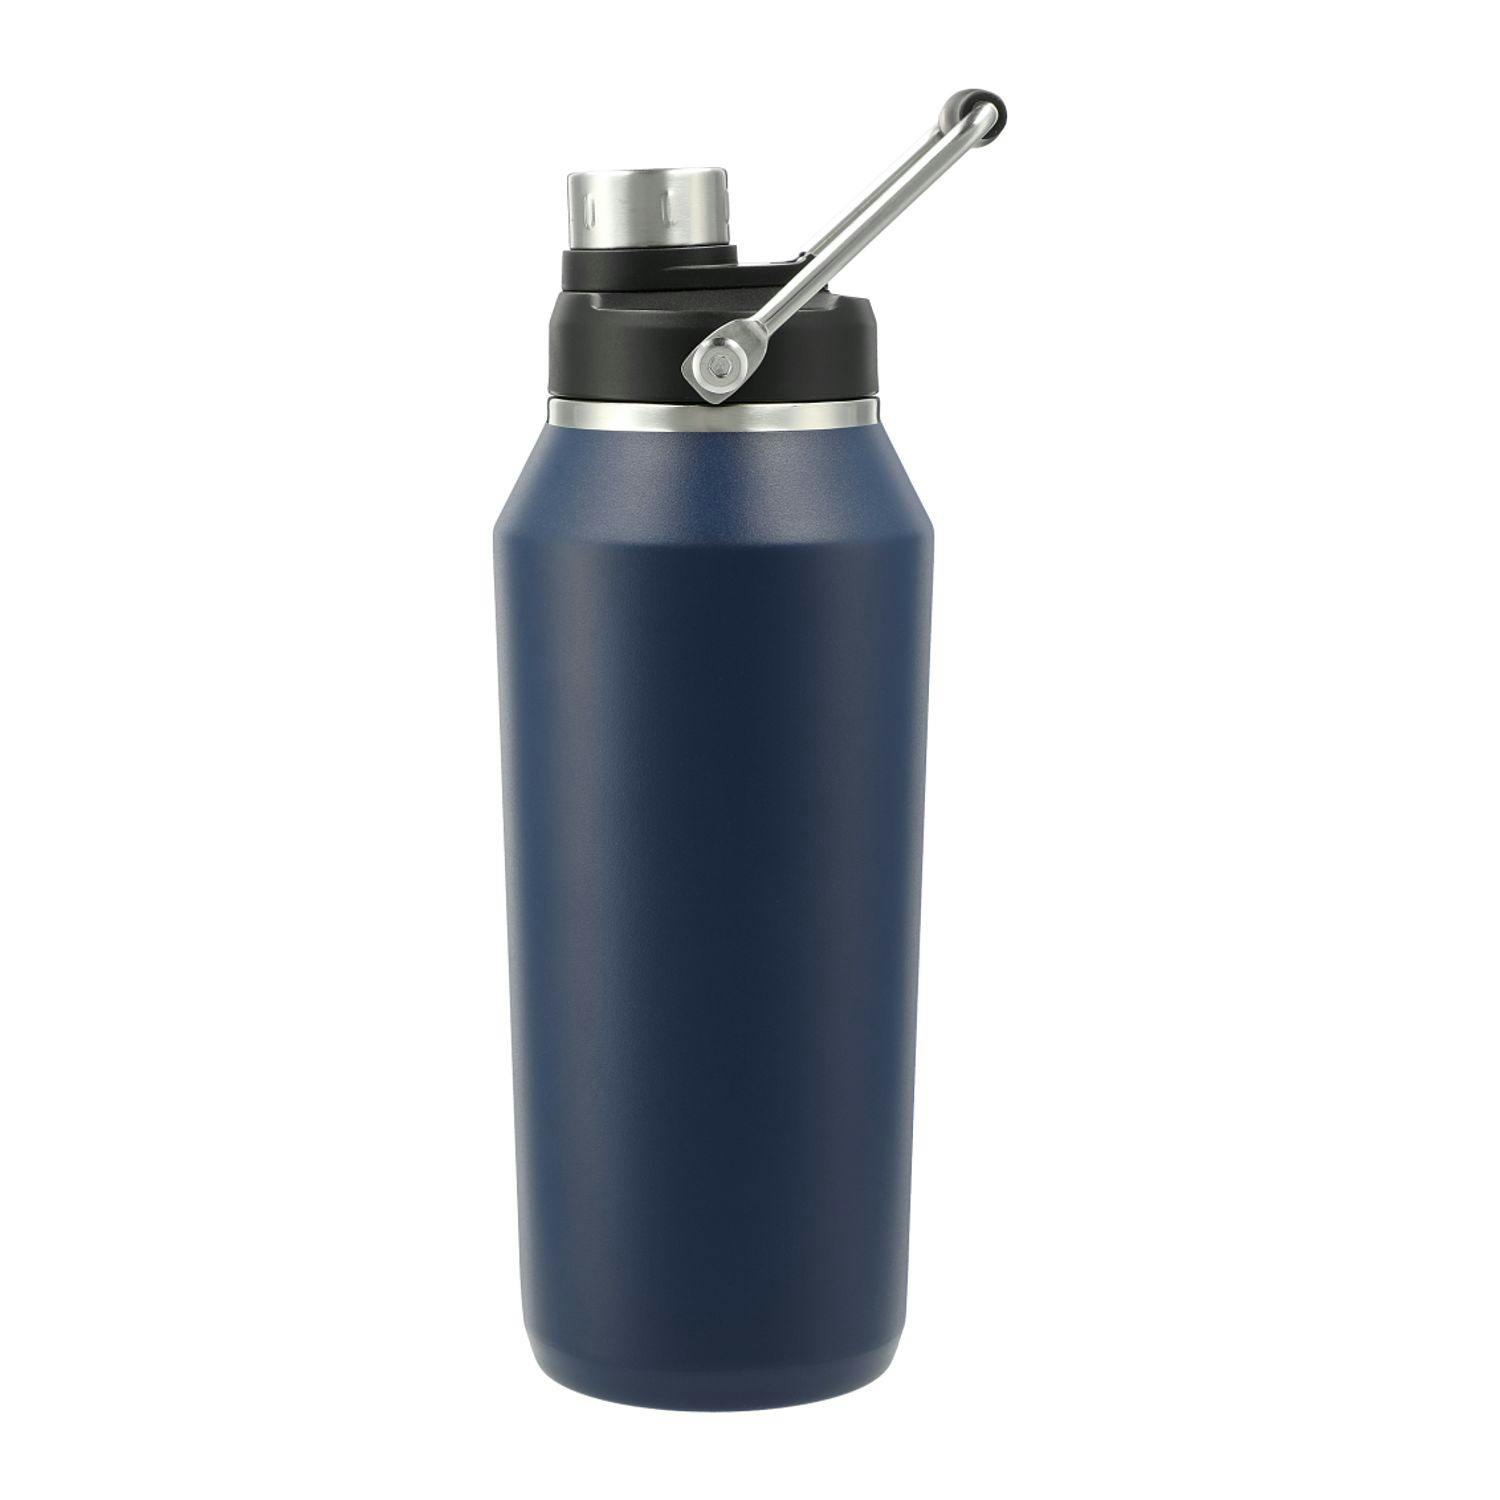 Vasco Copper Vacuum Insulated Bottle 40oz - additional Image 1